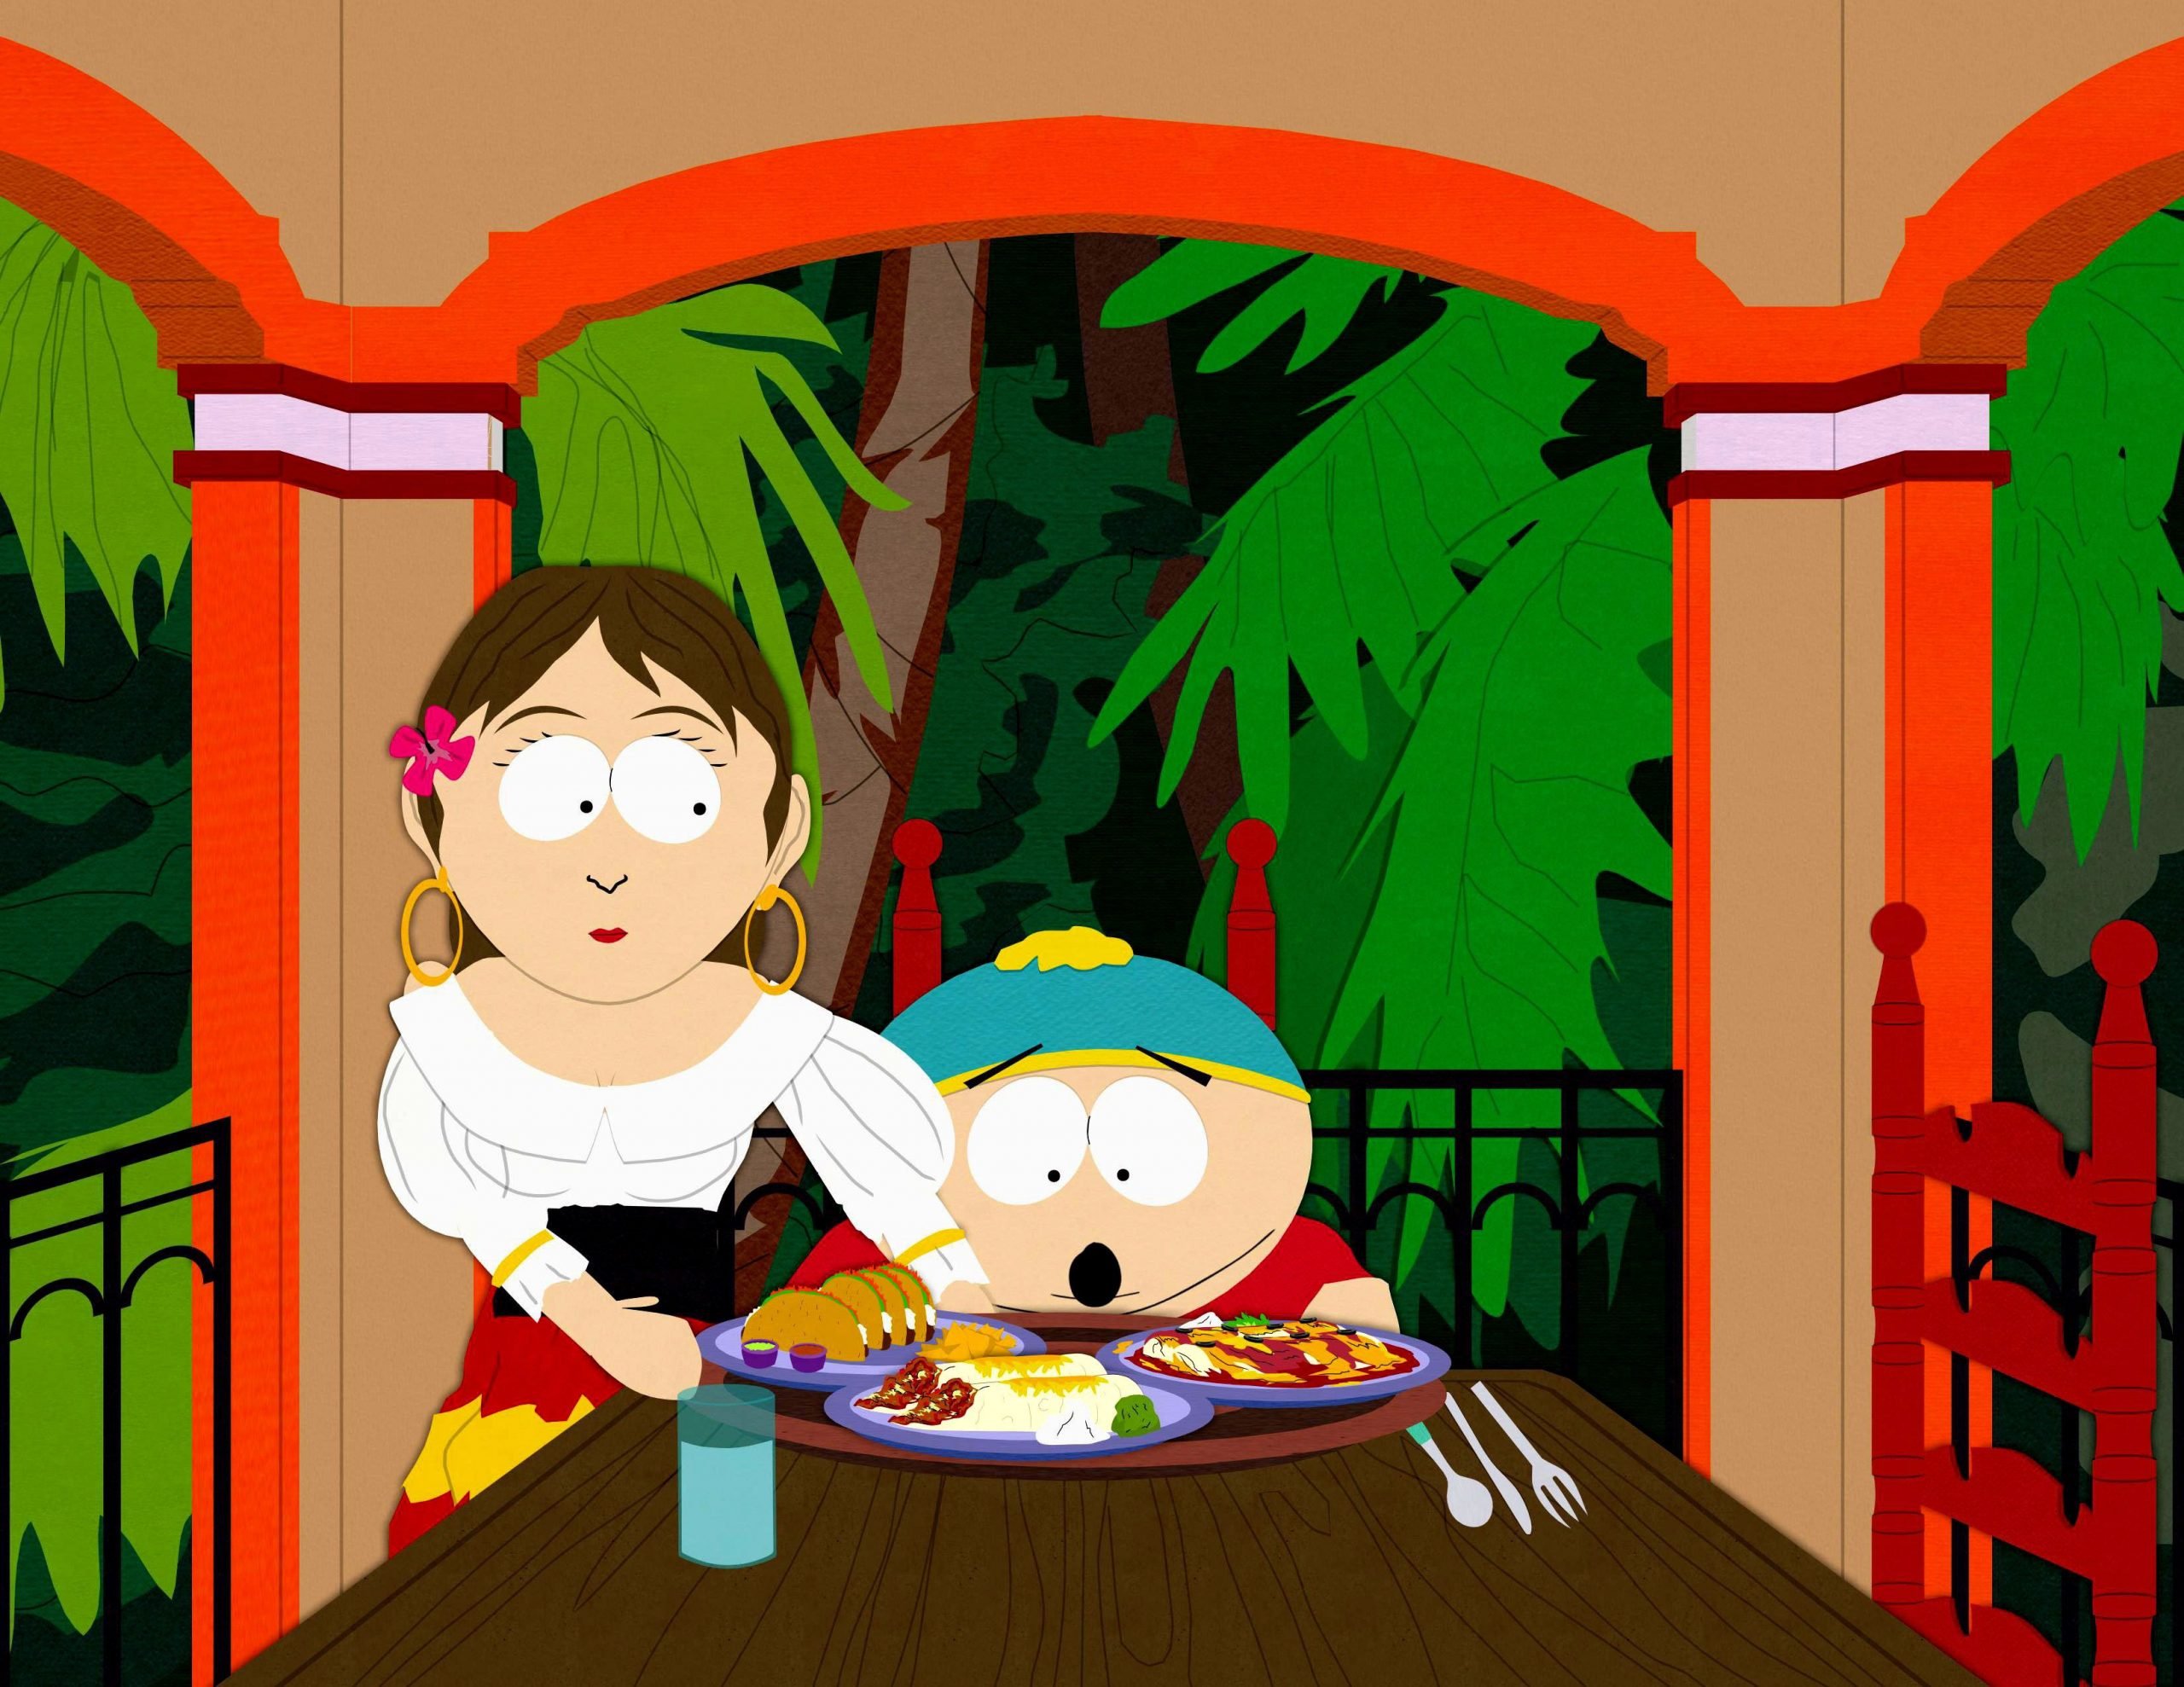 ‘South Park’ Creators Trey Parker and Matt Stone’s Plans to Renovate Casa Bonita Would Make Cartman Freak Out